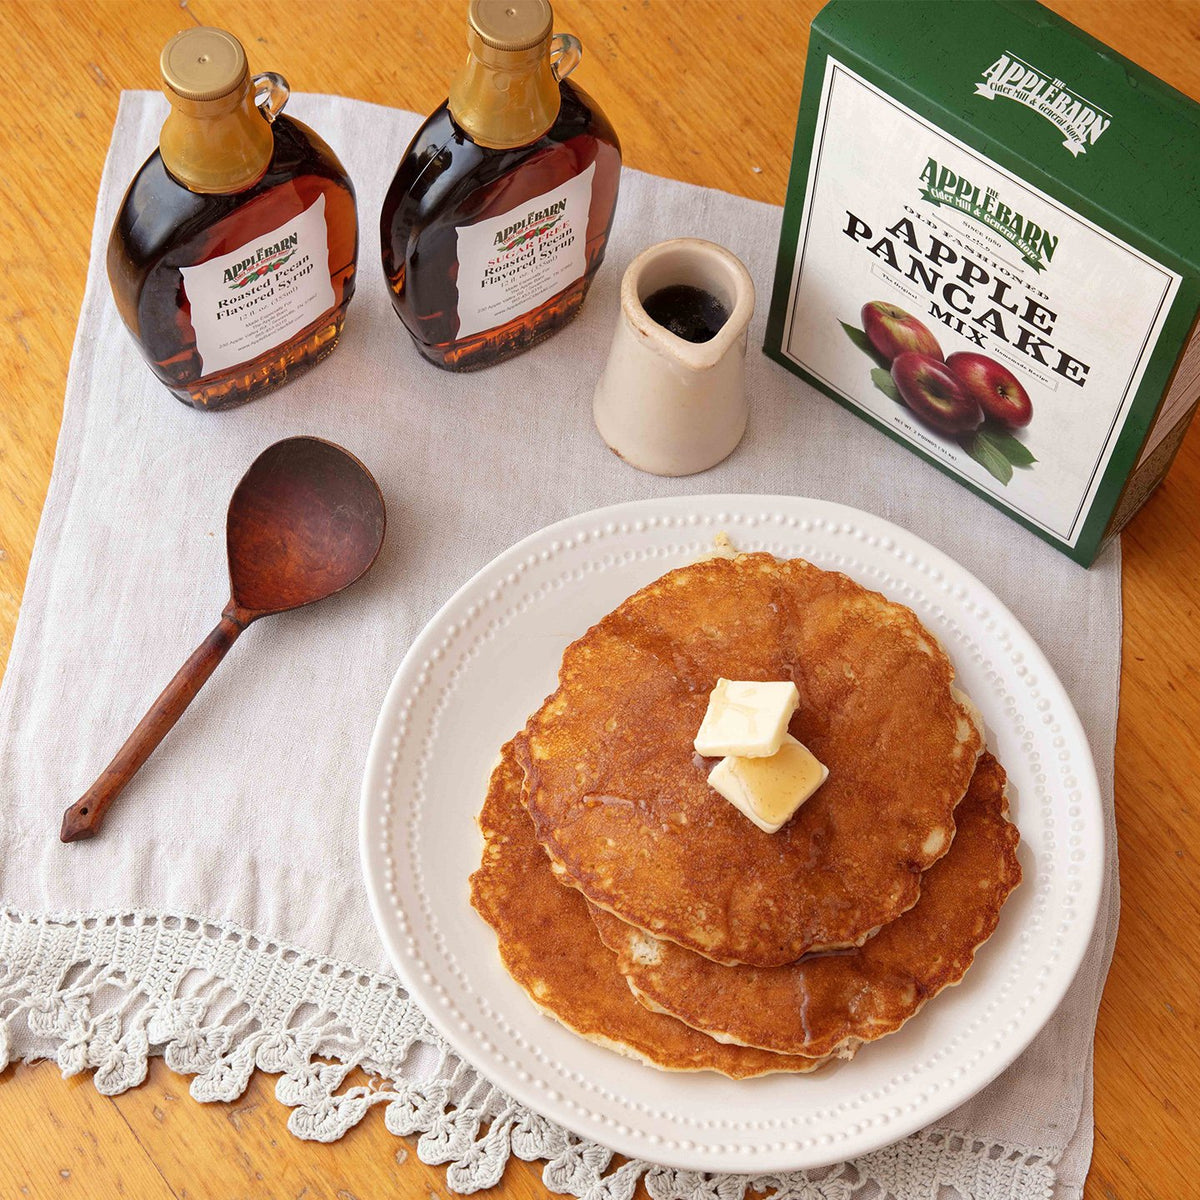 Sugar free roasted pecan flavored syrup on apple pancakes